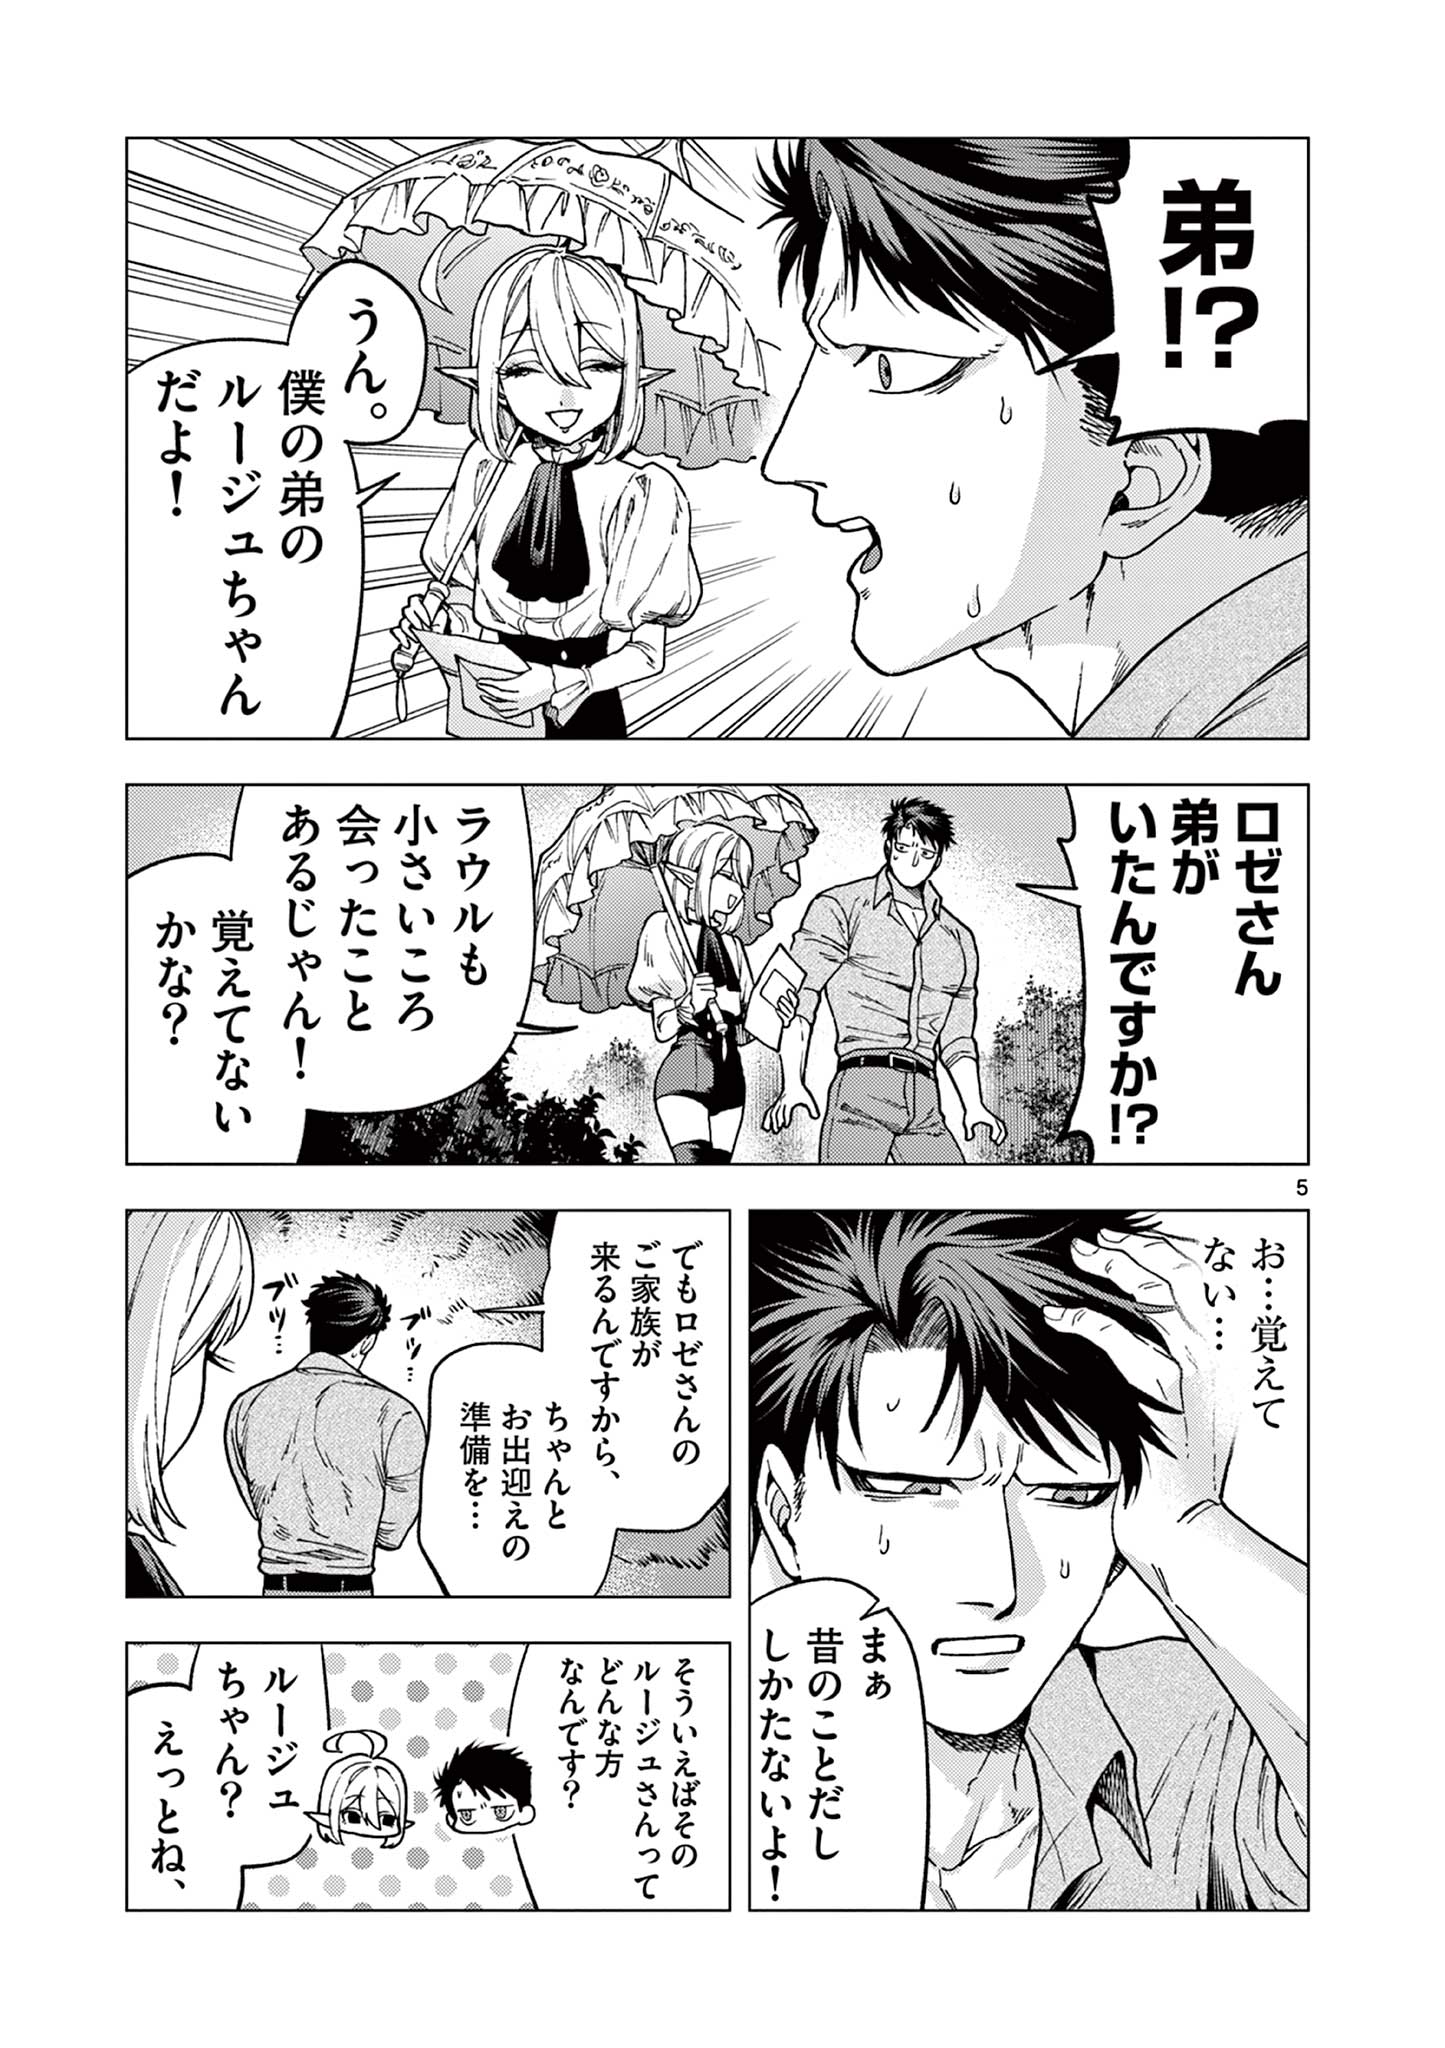 Raul to Kyuuketsuki - Chapter 6 - Page 5